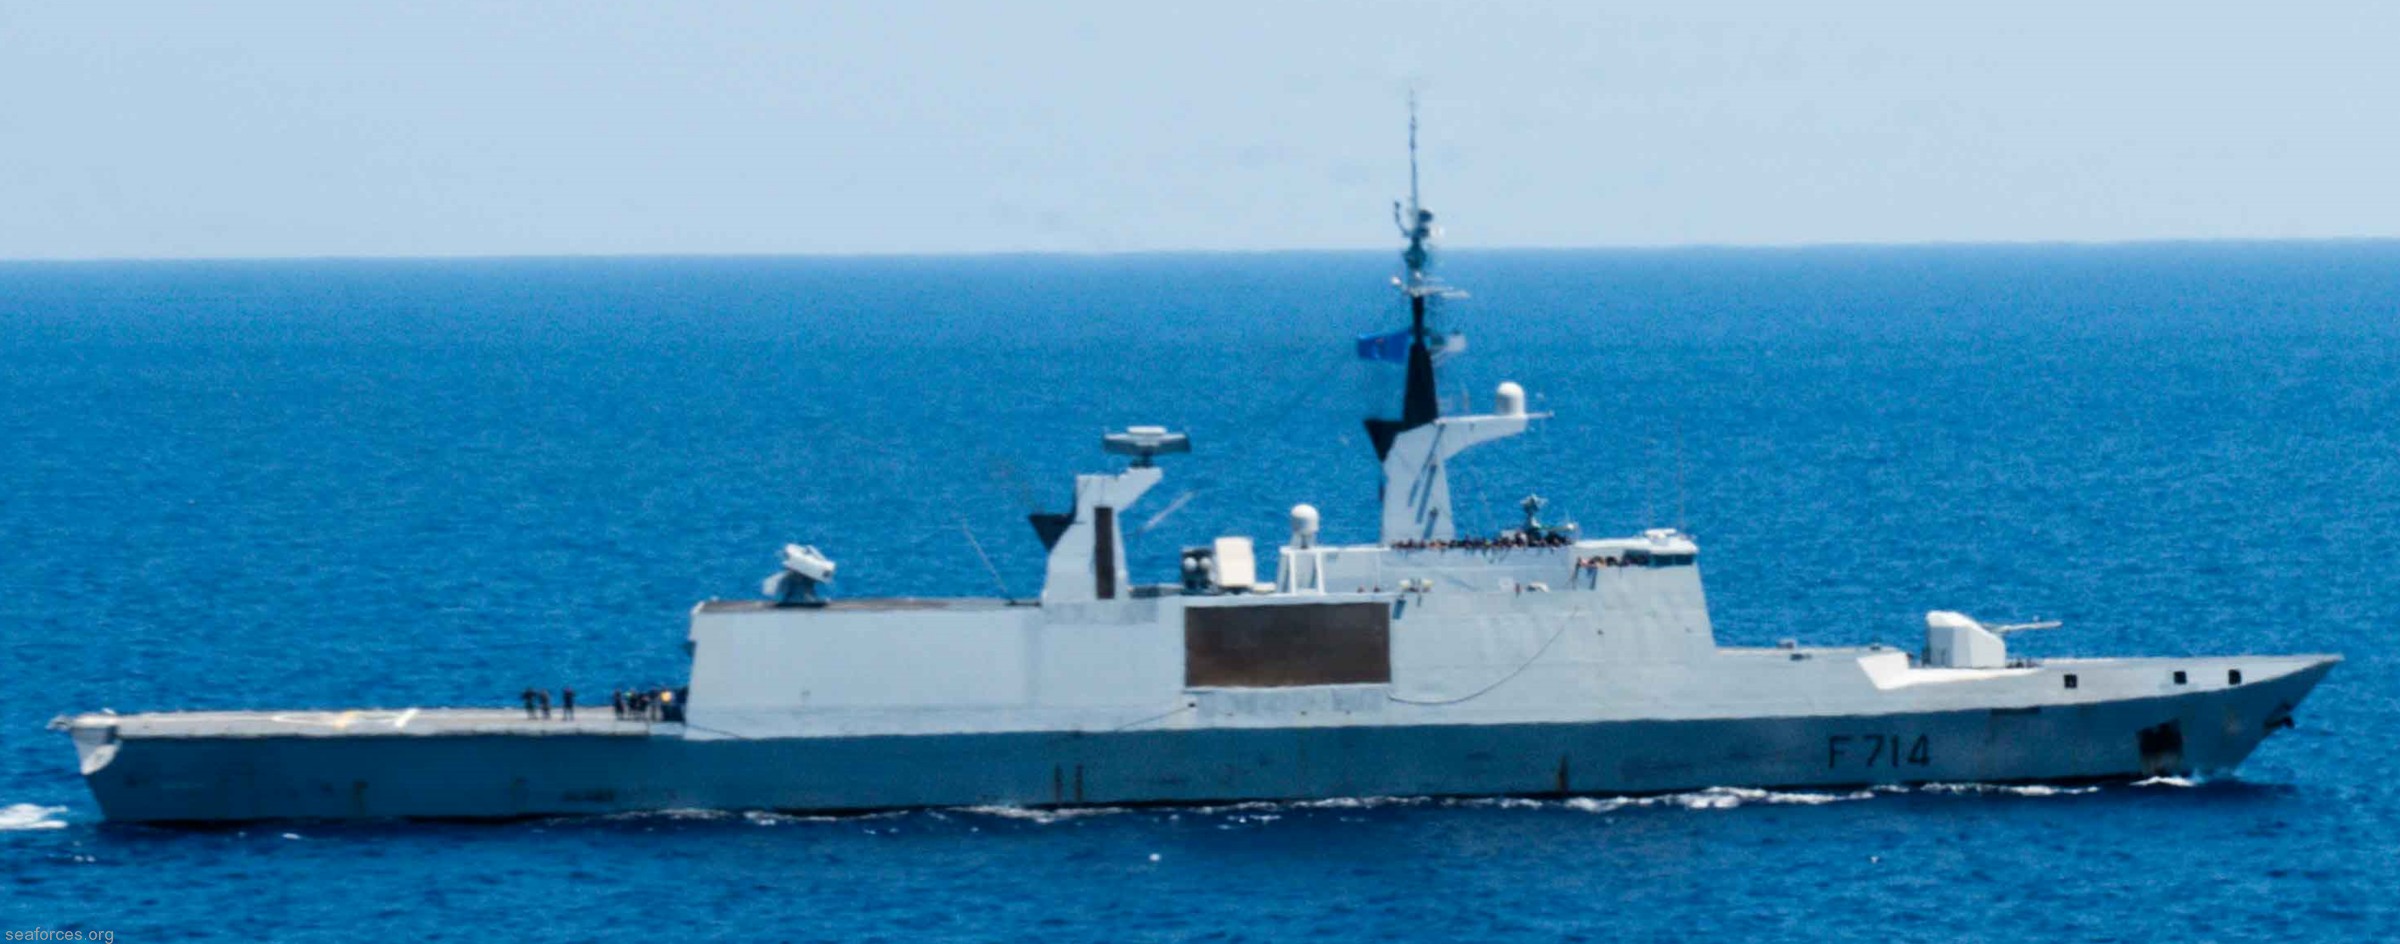 f-714 fs guepratte la fayette class frigate flf french navy marine nationale 12